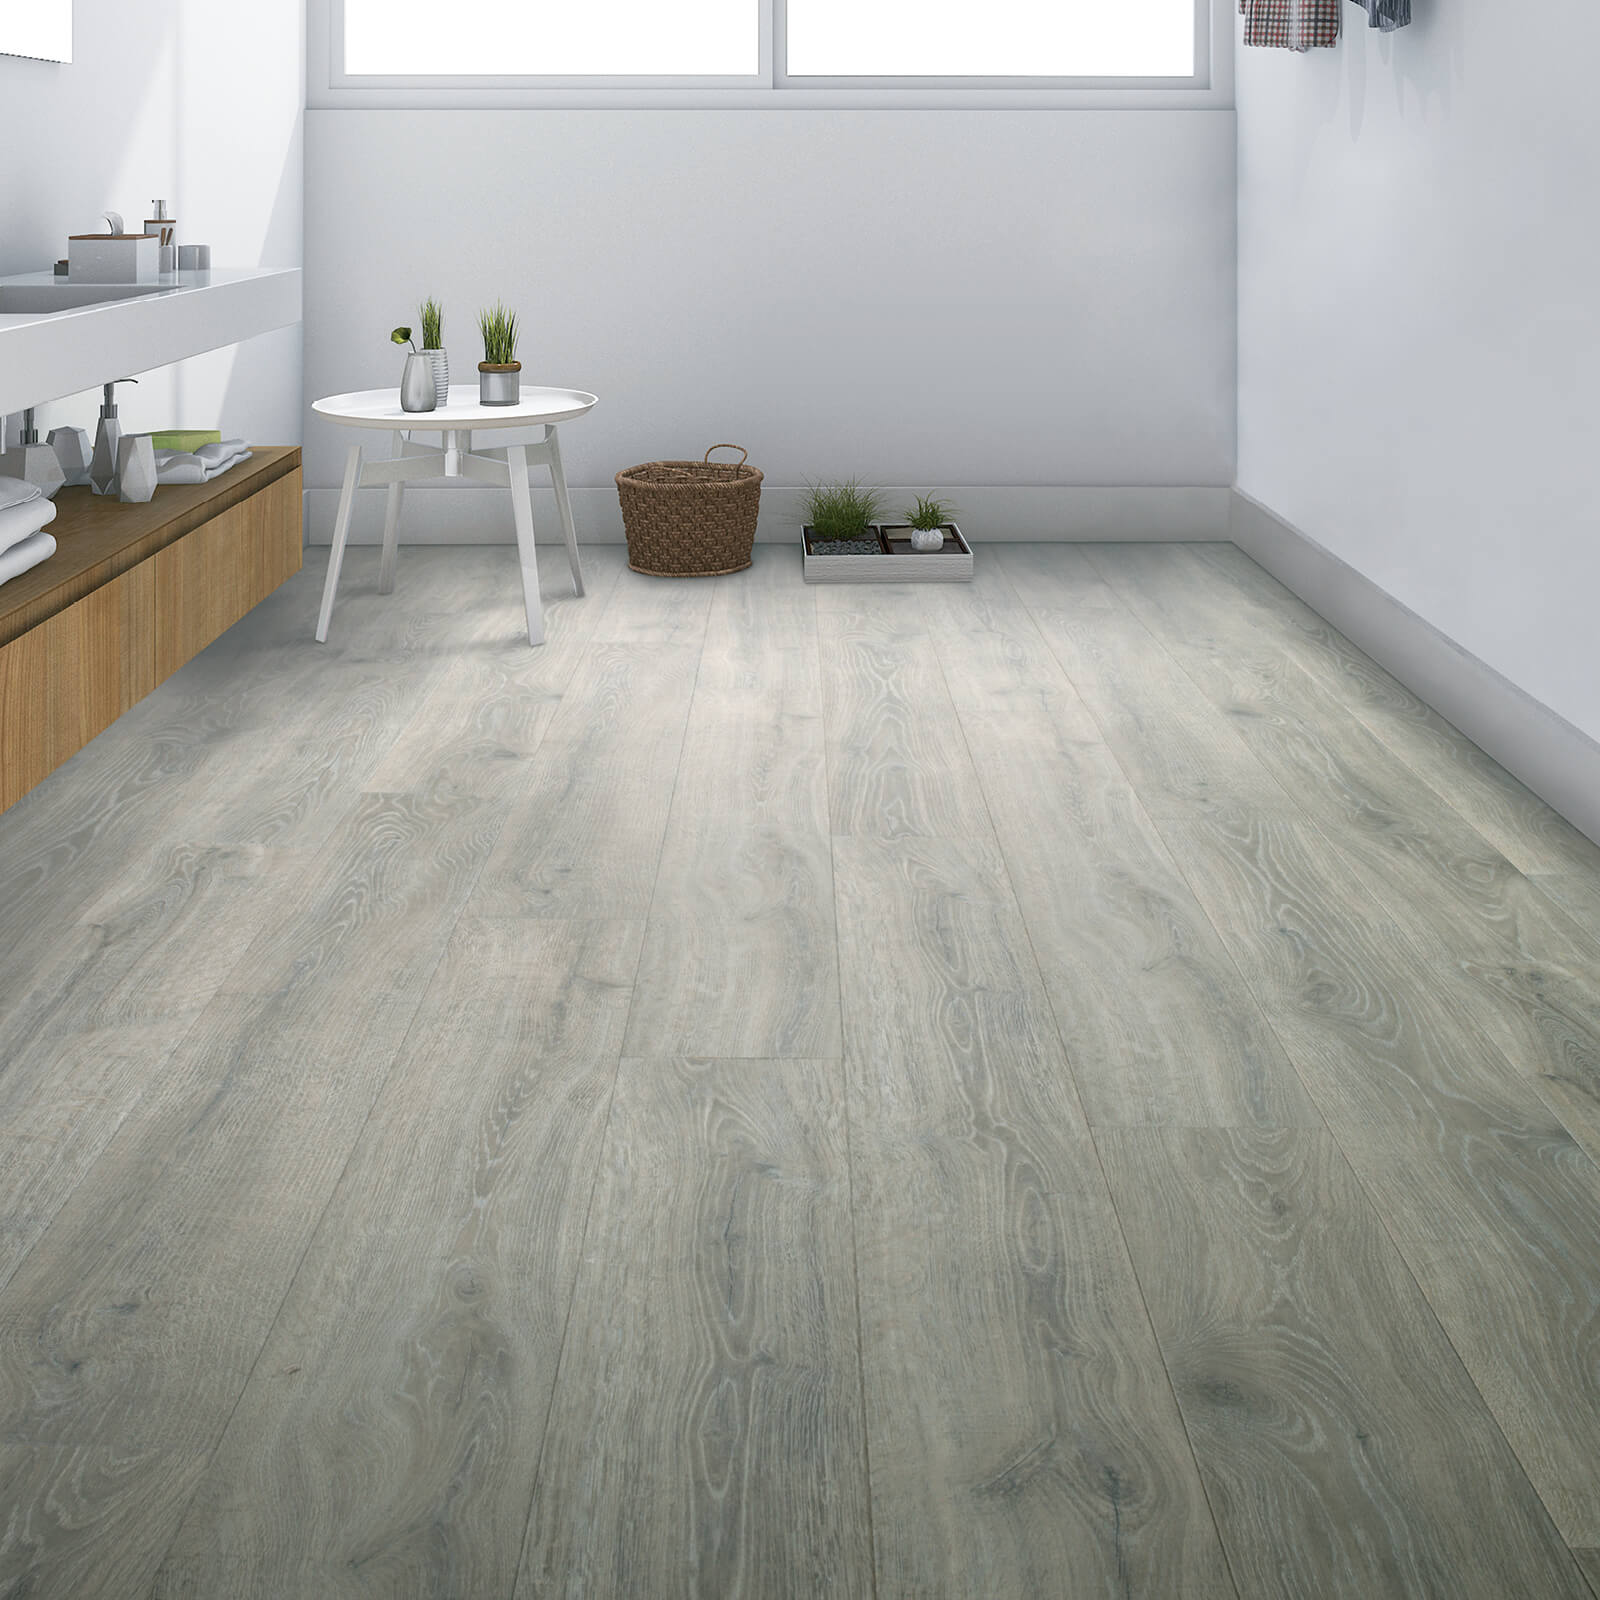 Wood-look laminate flooring in home |Floorco Premium